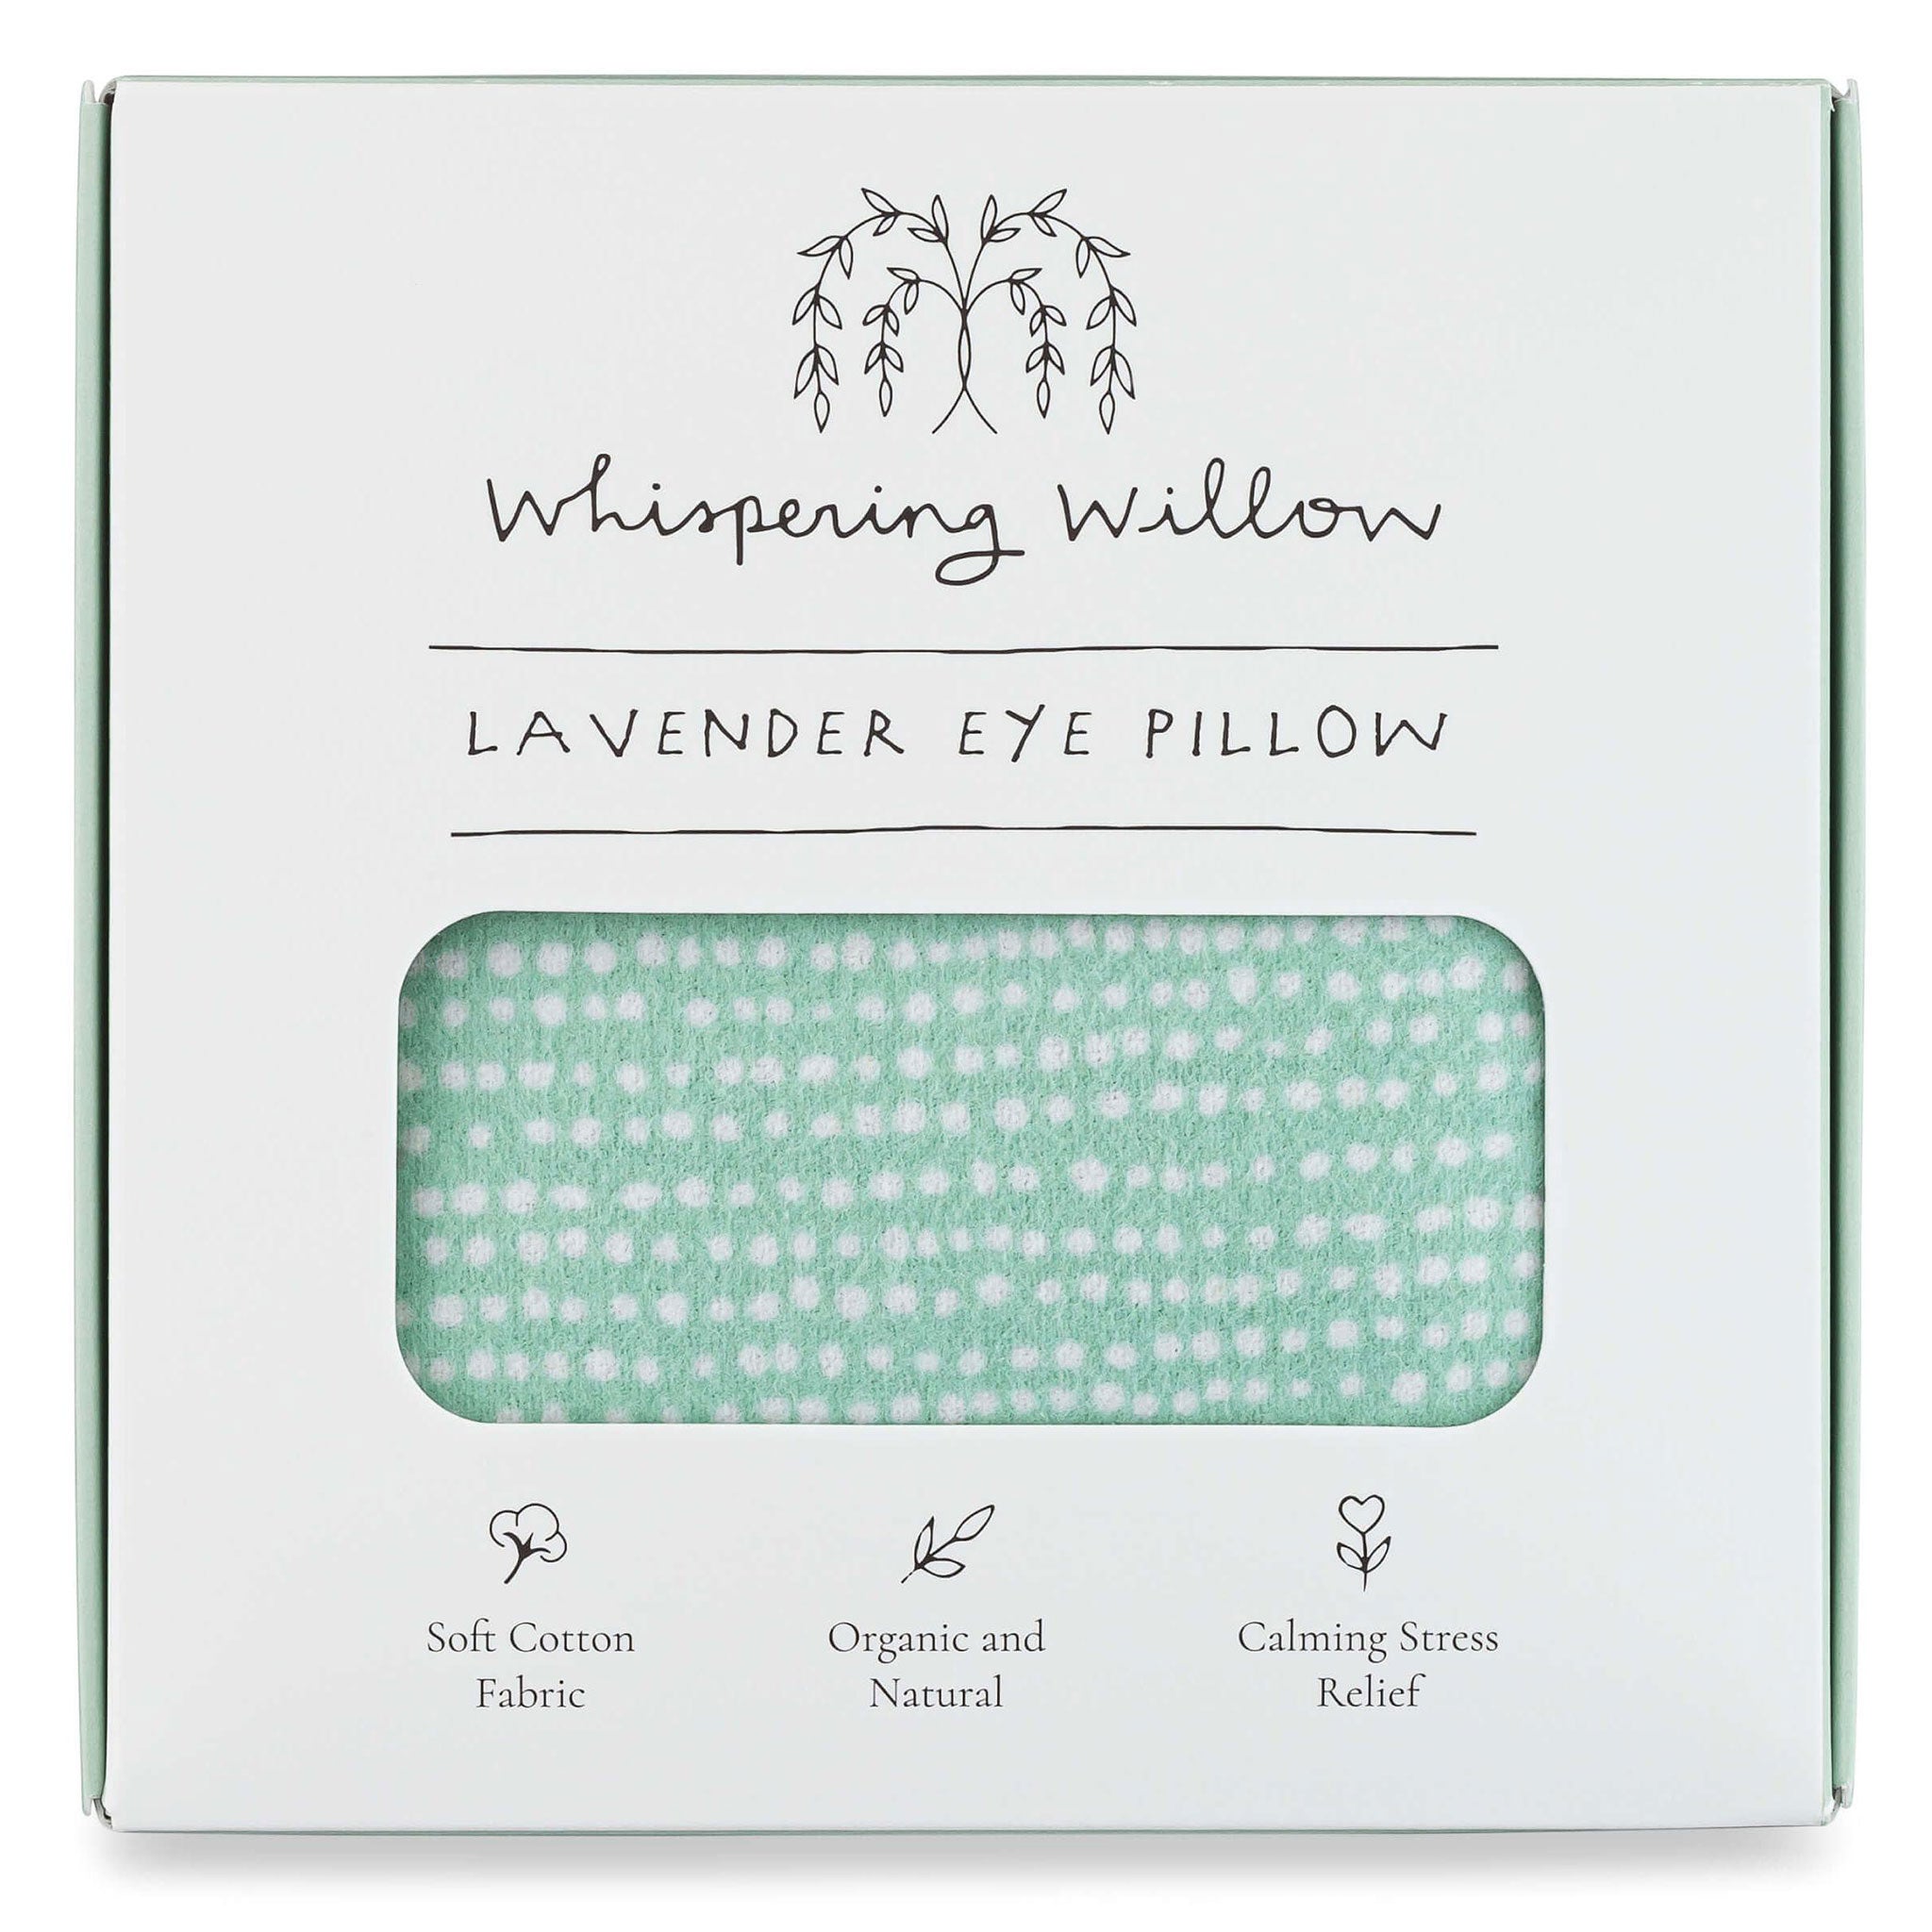 Lavender Eye Pillow in cool mint Cotton